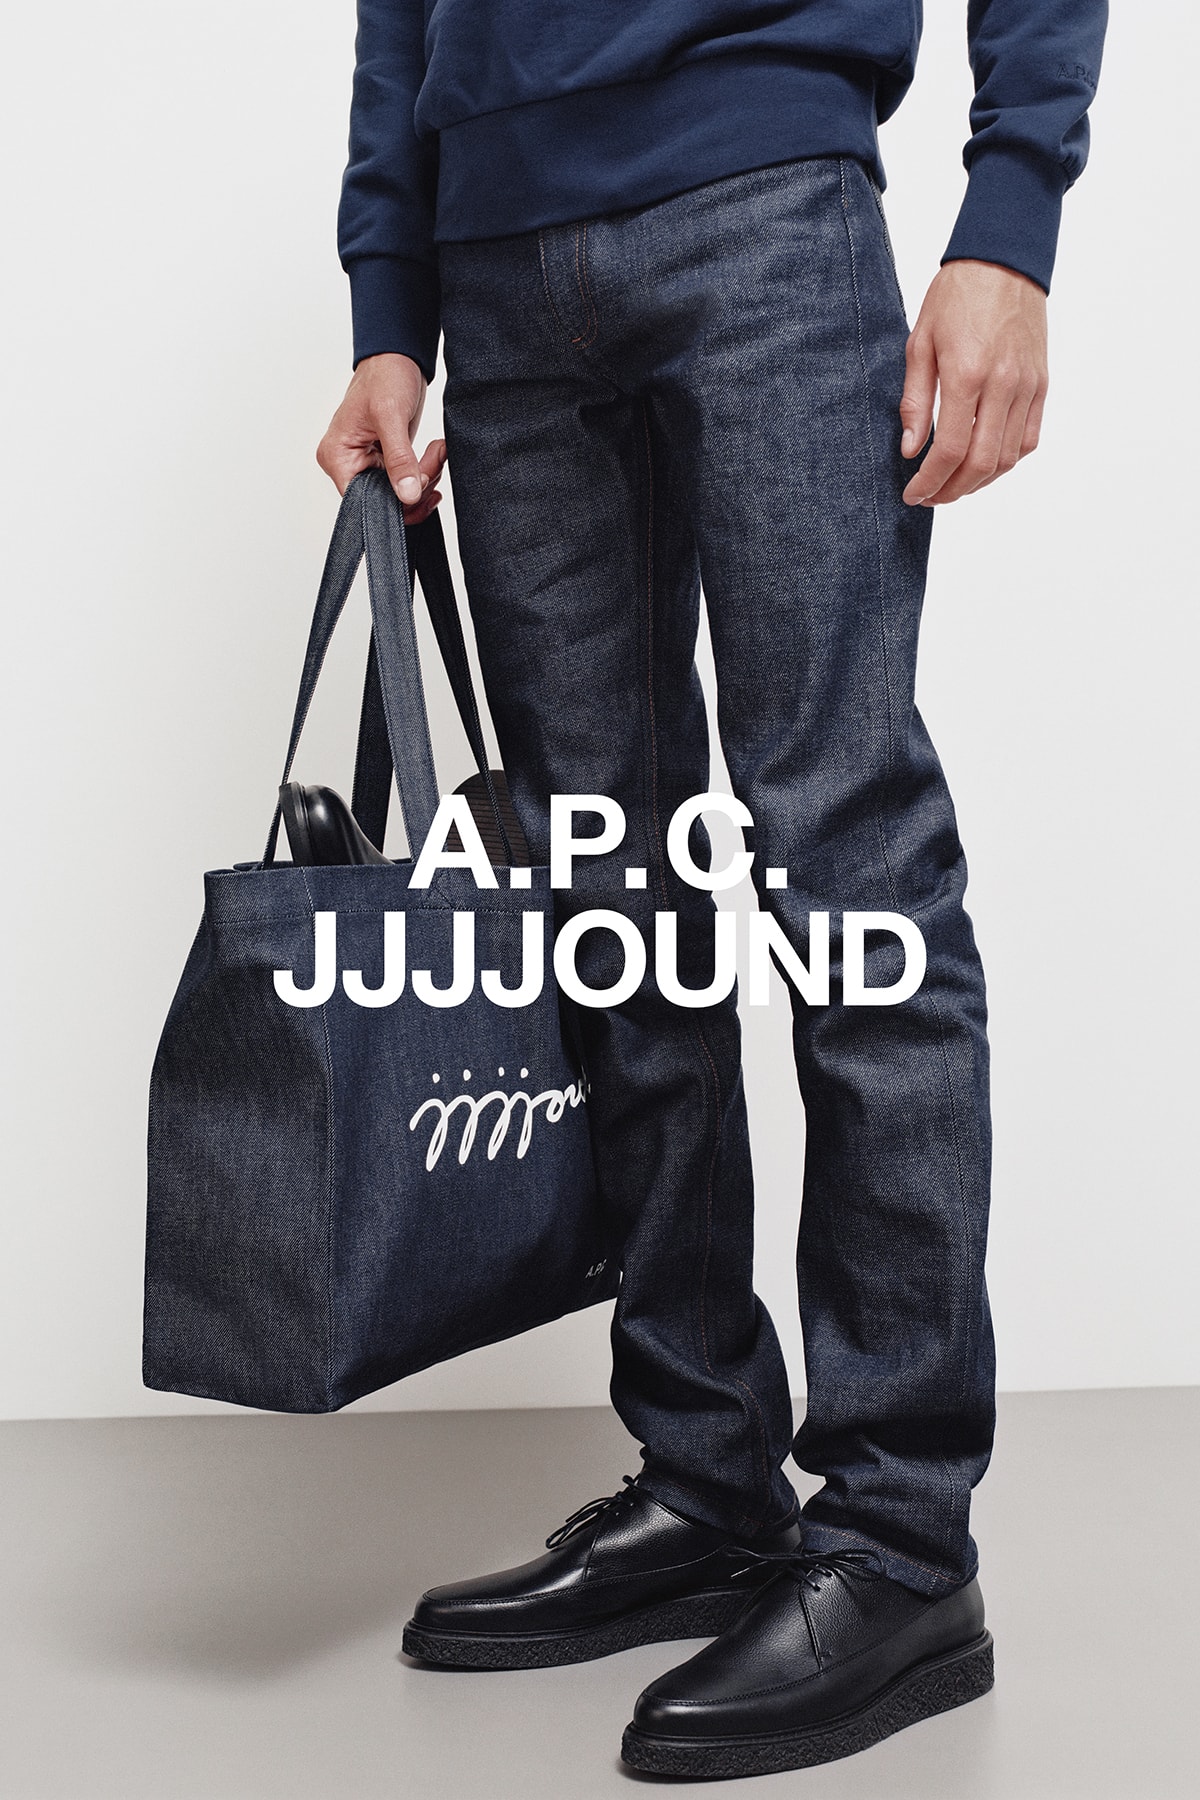 JJJJound x A.P.C. Collection Lookbook Shopping Bag